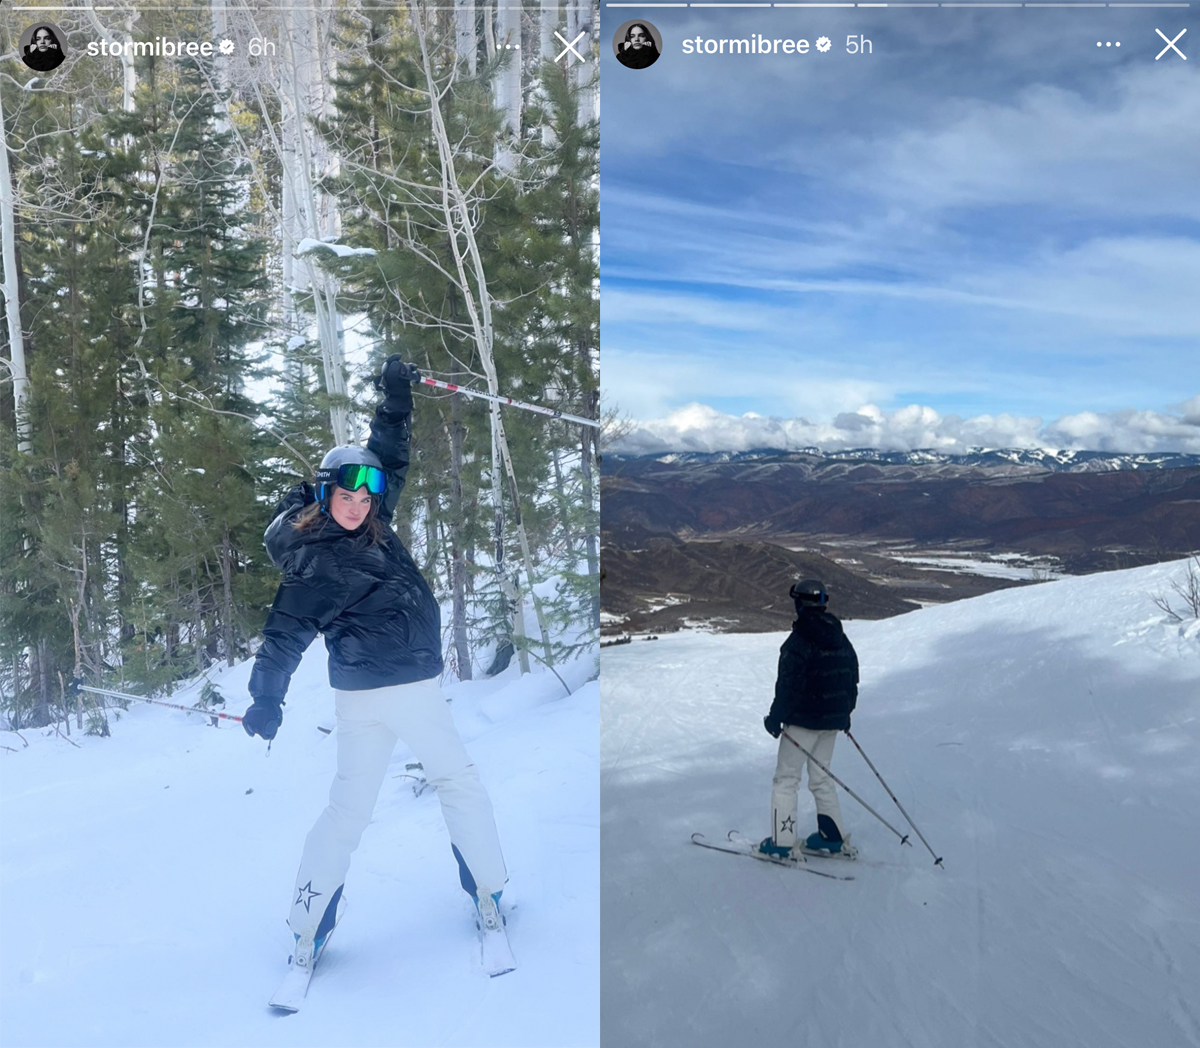 Joe Jonas ‘Enjoying’ Spending Time With Model Stormi Bree Amid Their Romantic Aspen Vacation!